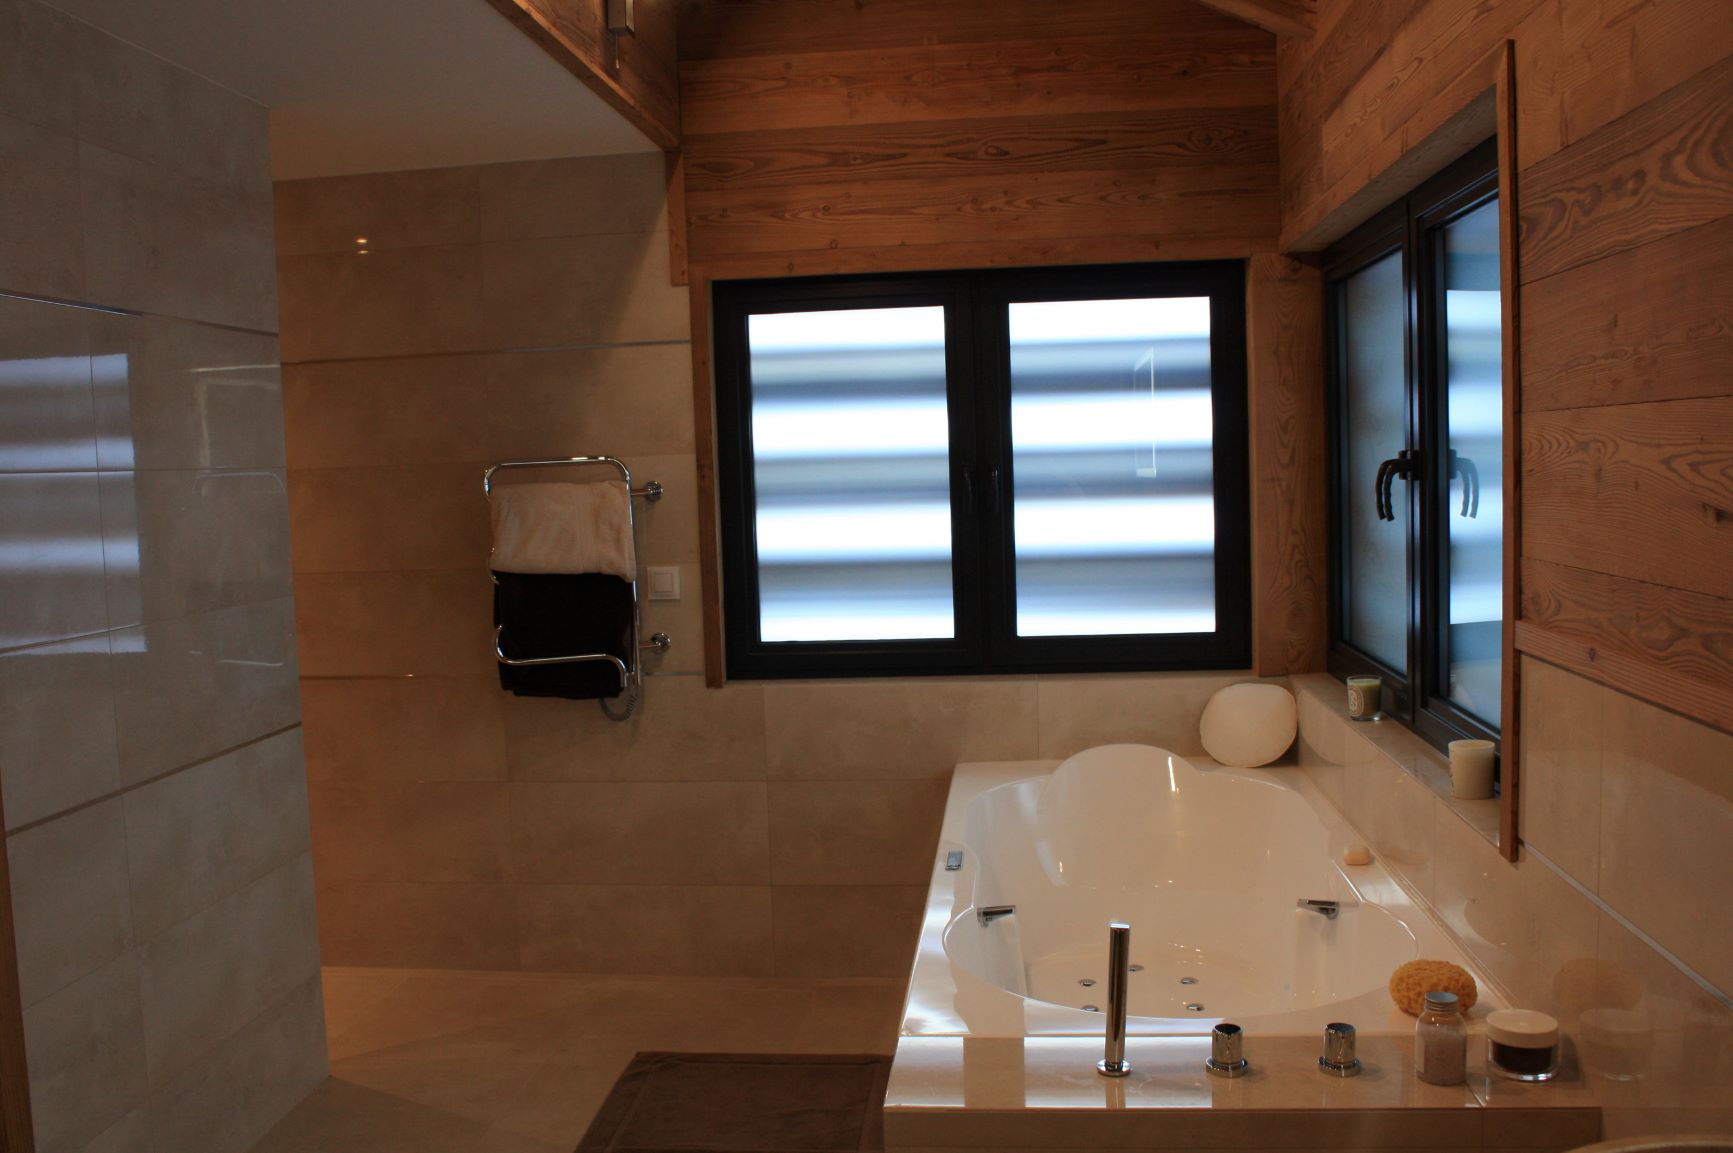 Galerie : Salle de bain CERF avec baignoire balnéo